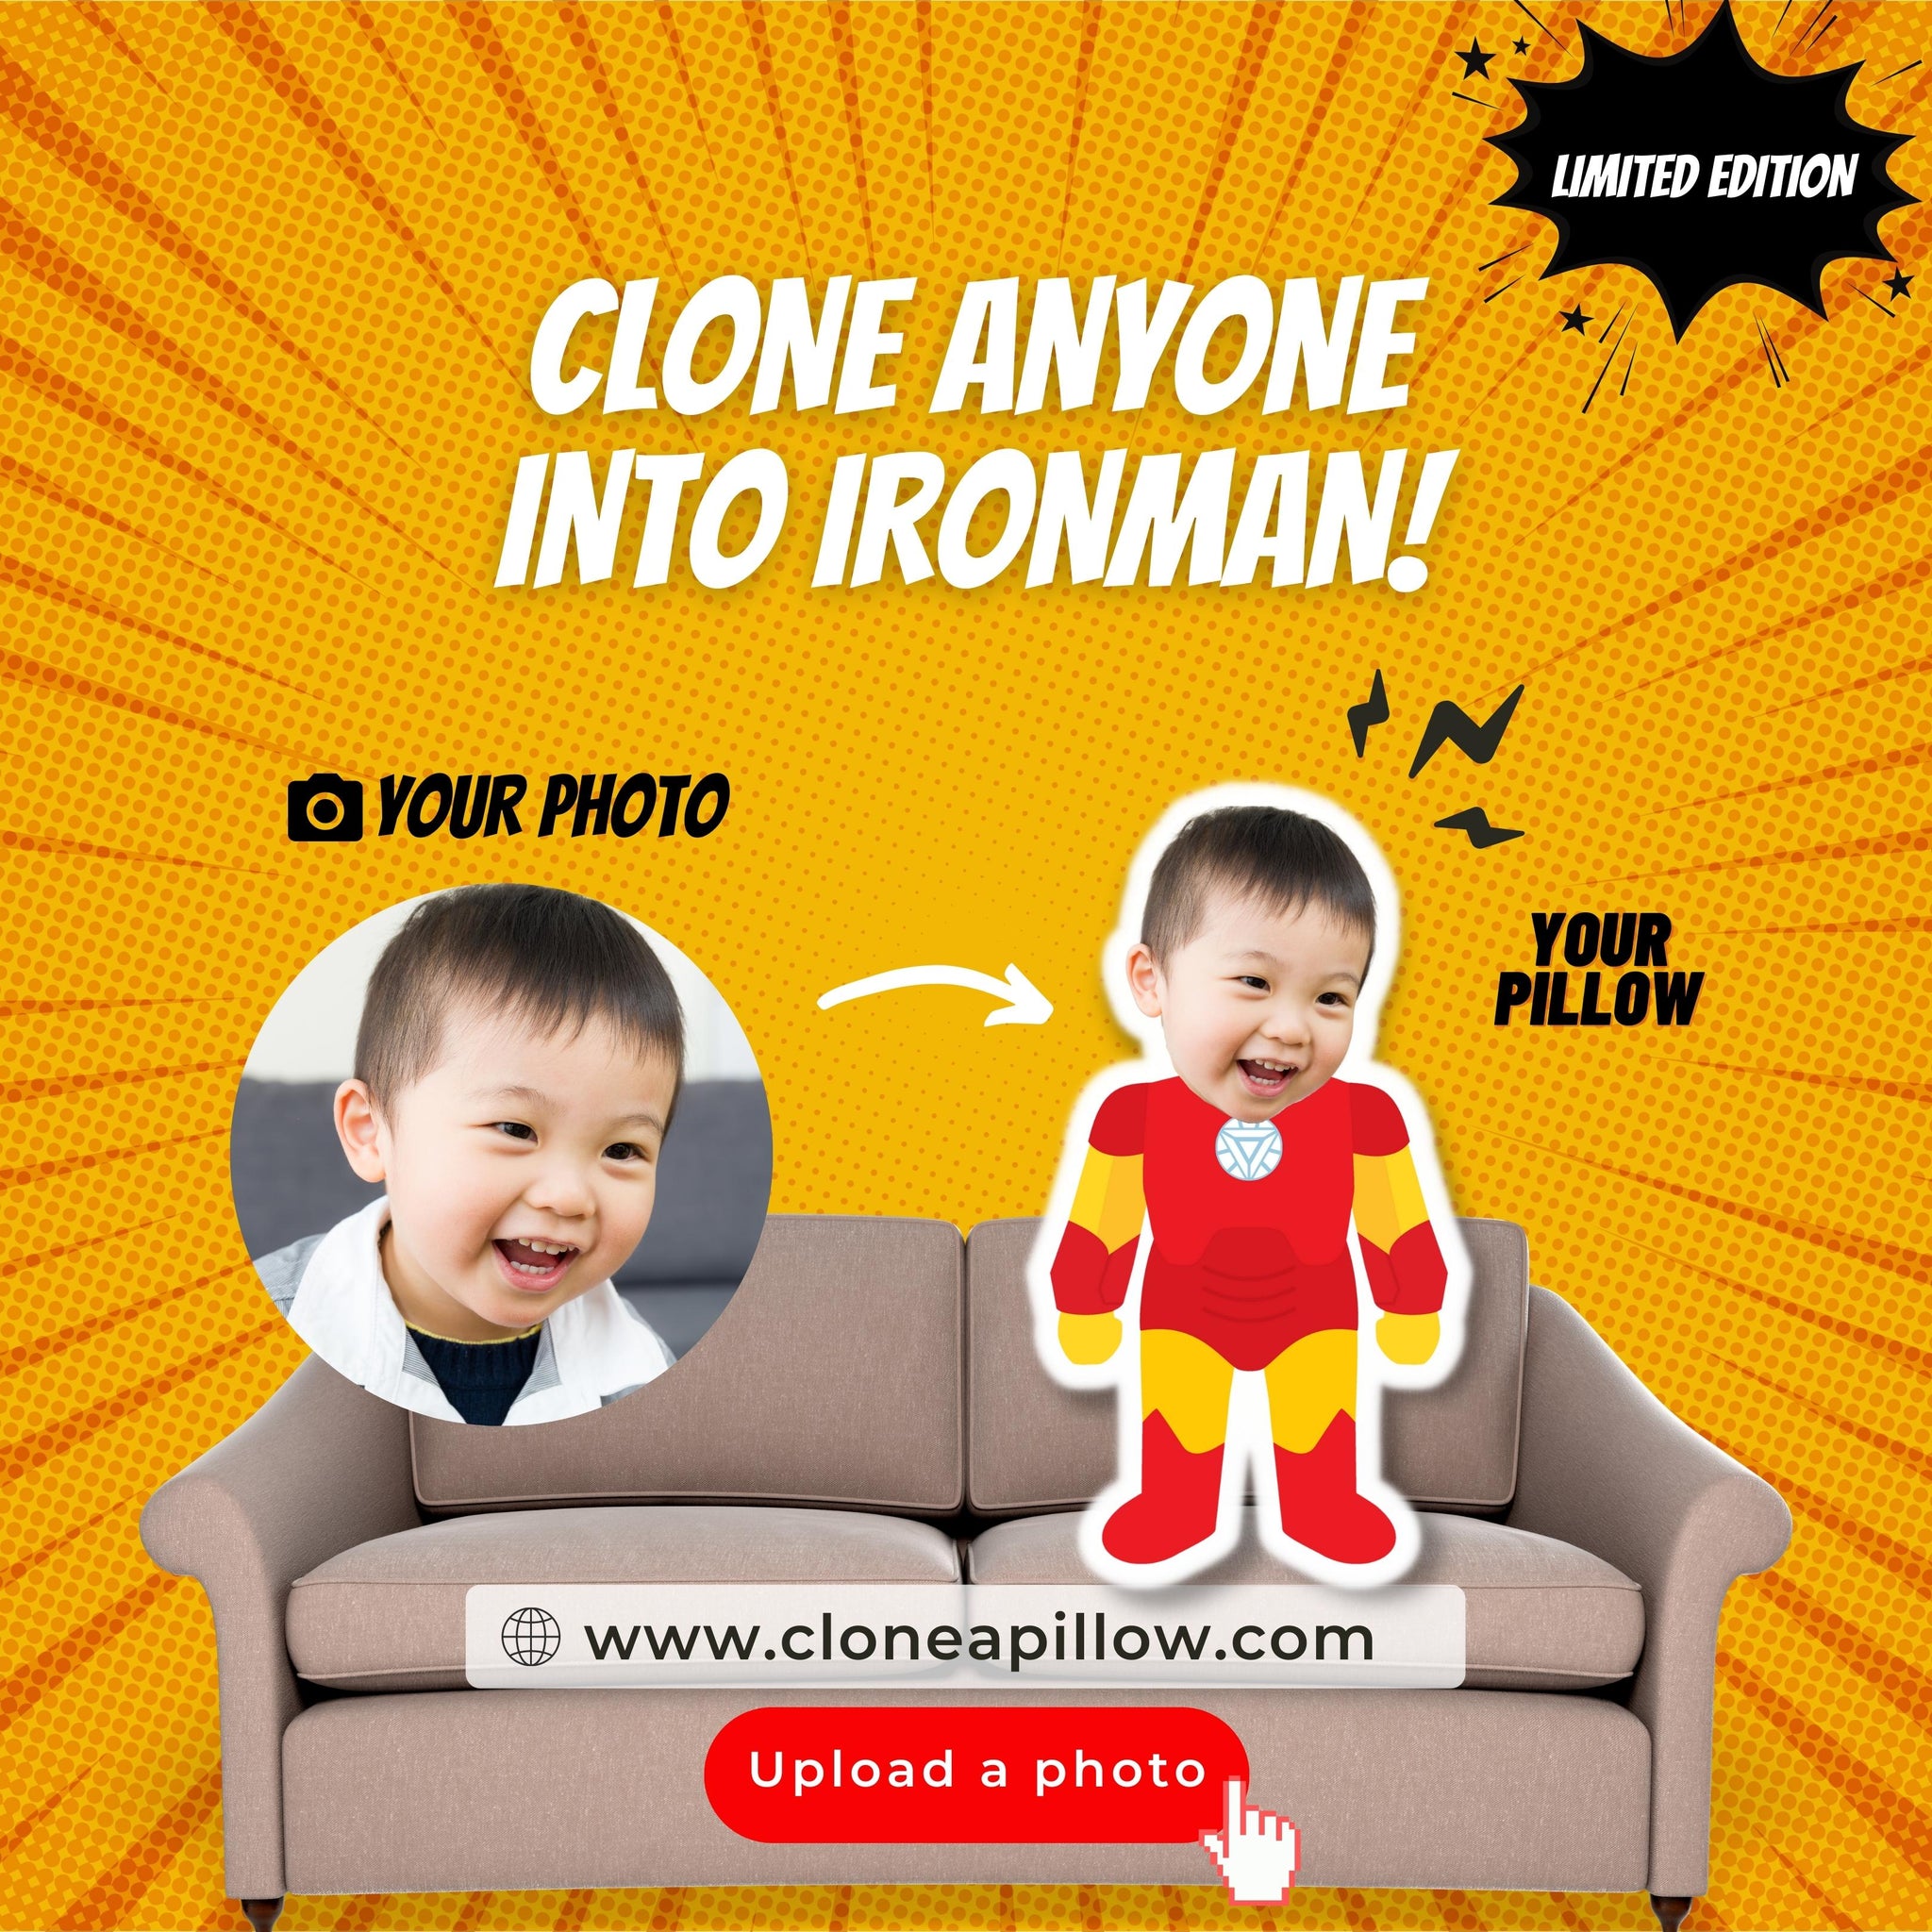 Clone Anyone into Ironman